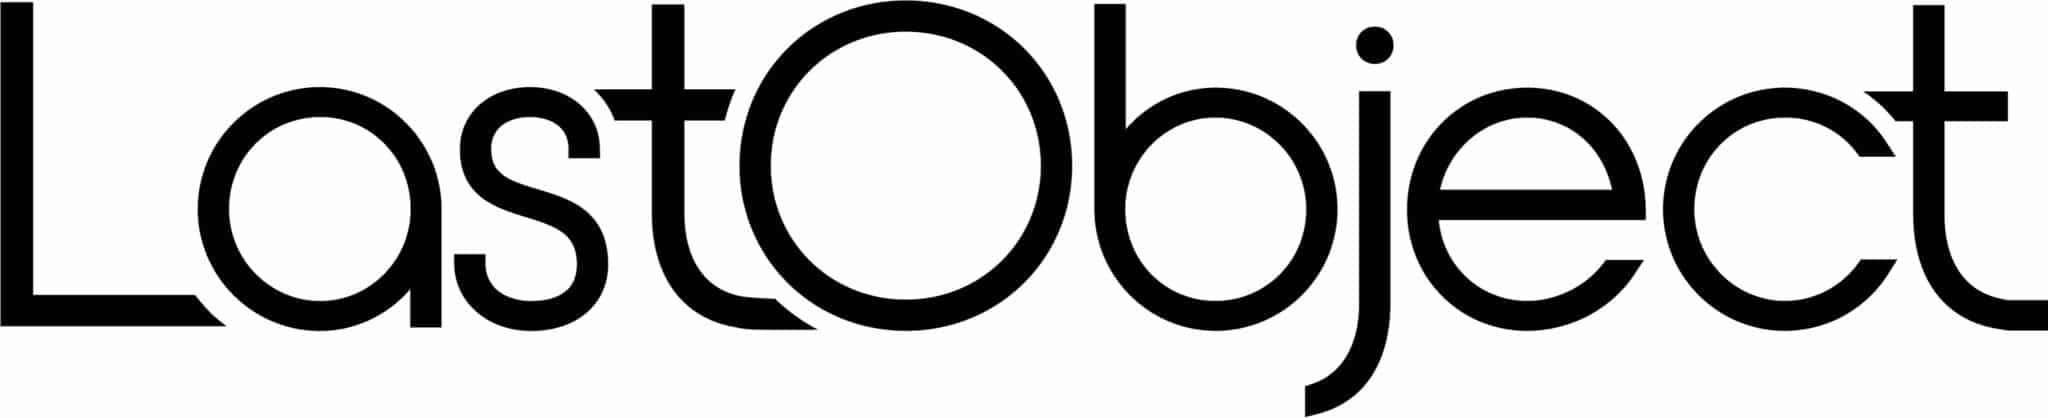 lastobject logo marque bio luxe